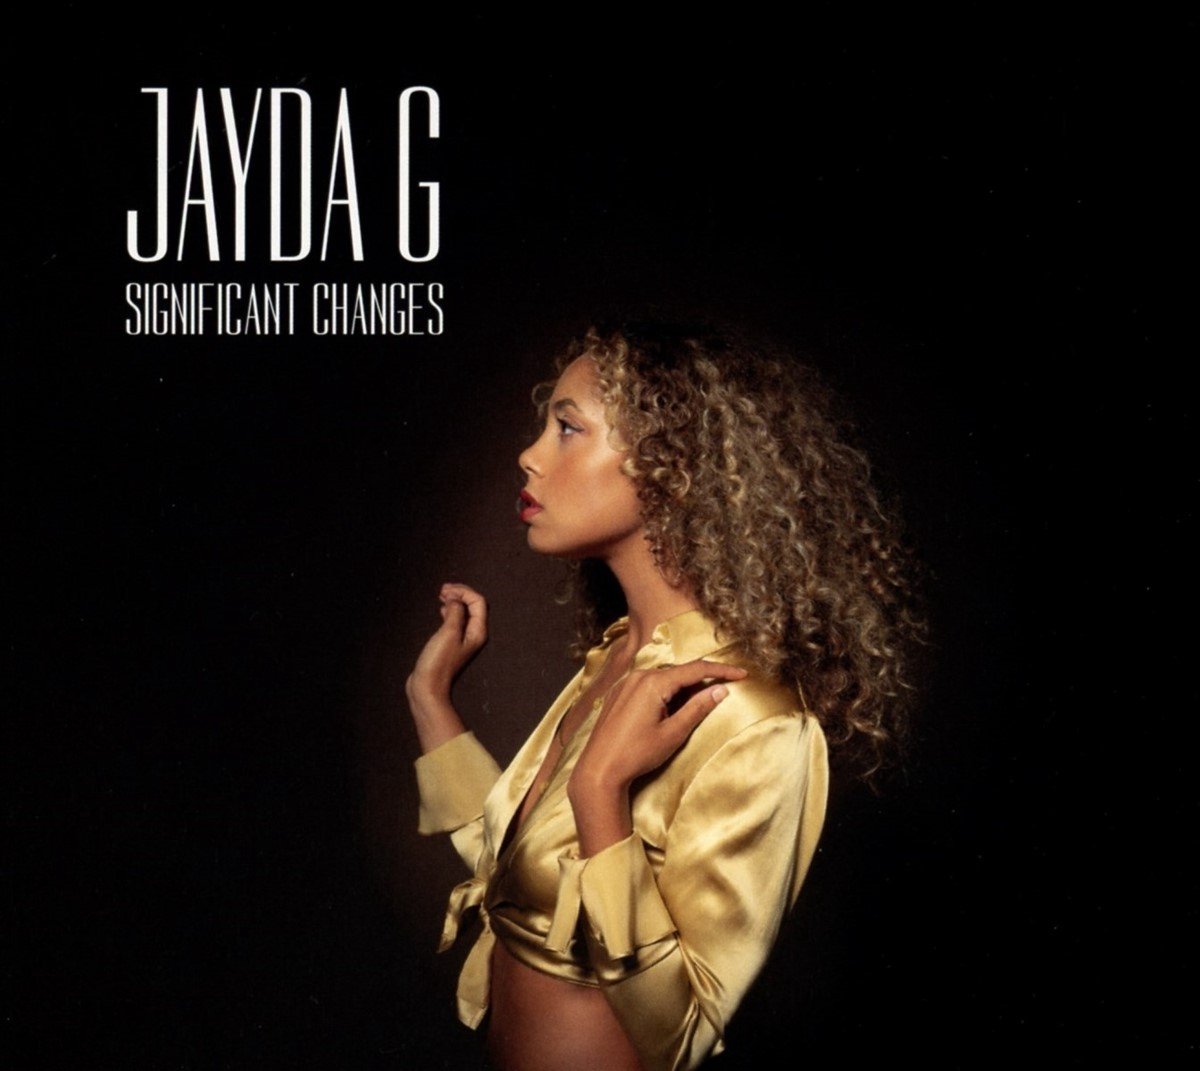 Jayda G - Significant Changes (CD) - Jayda G